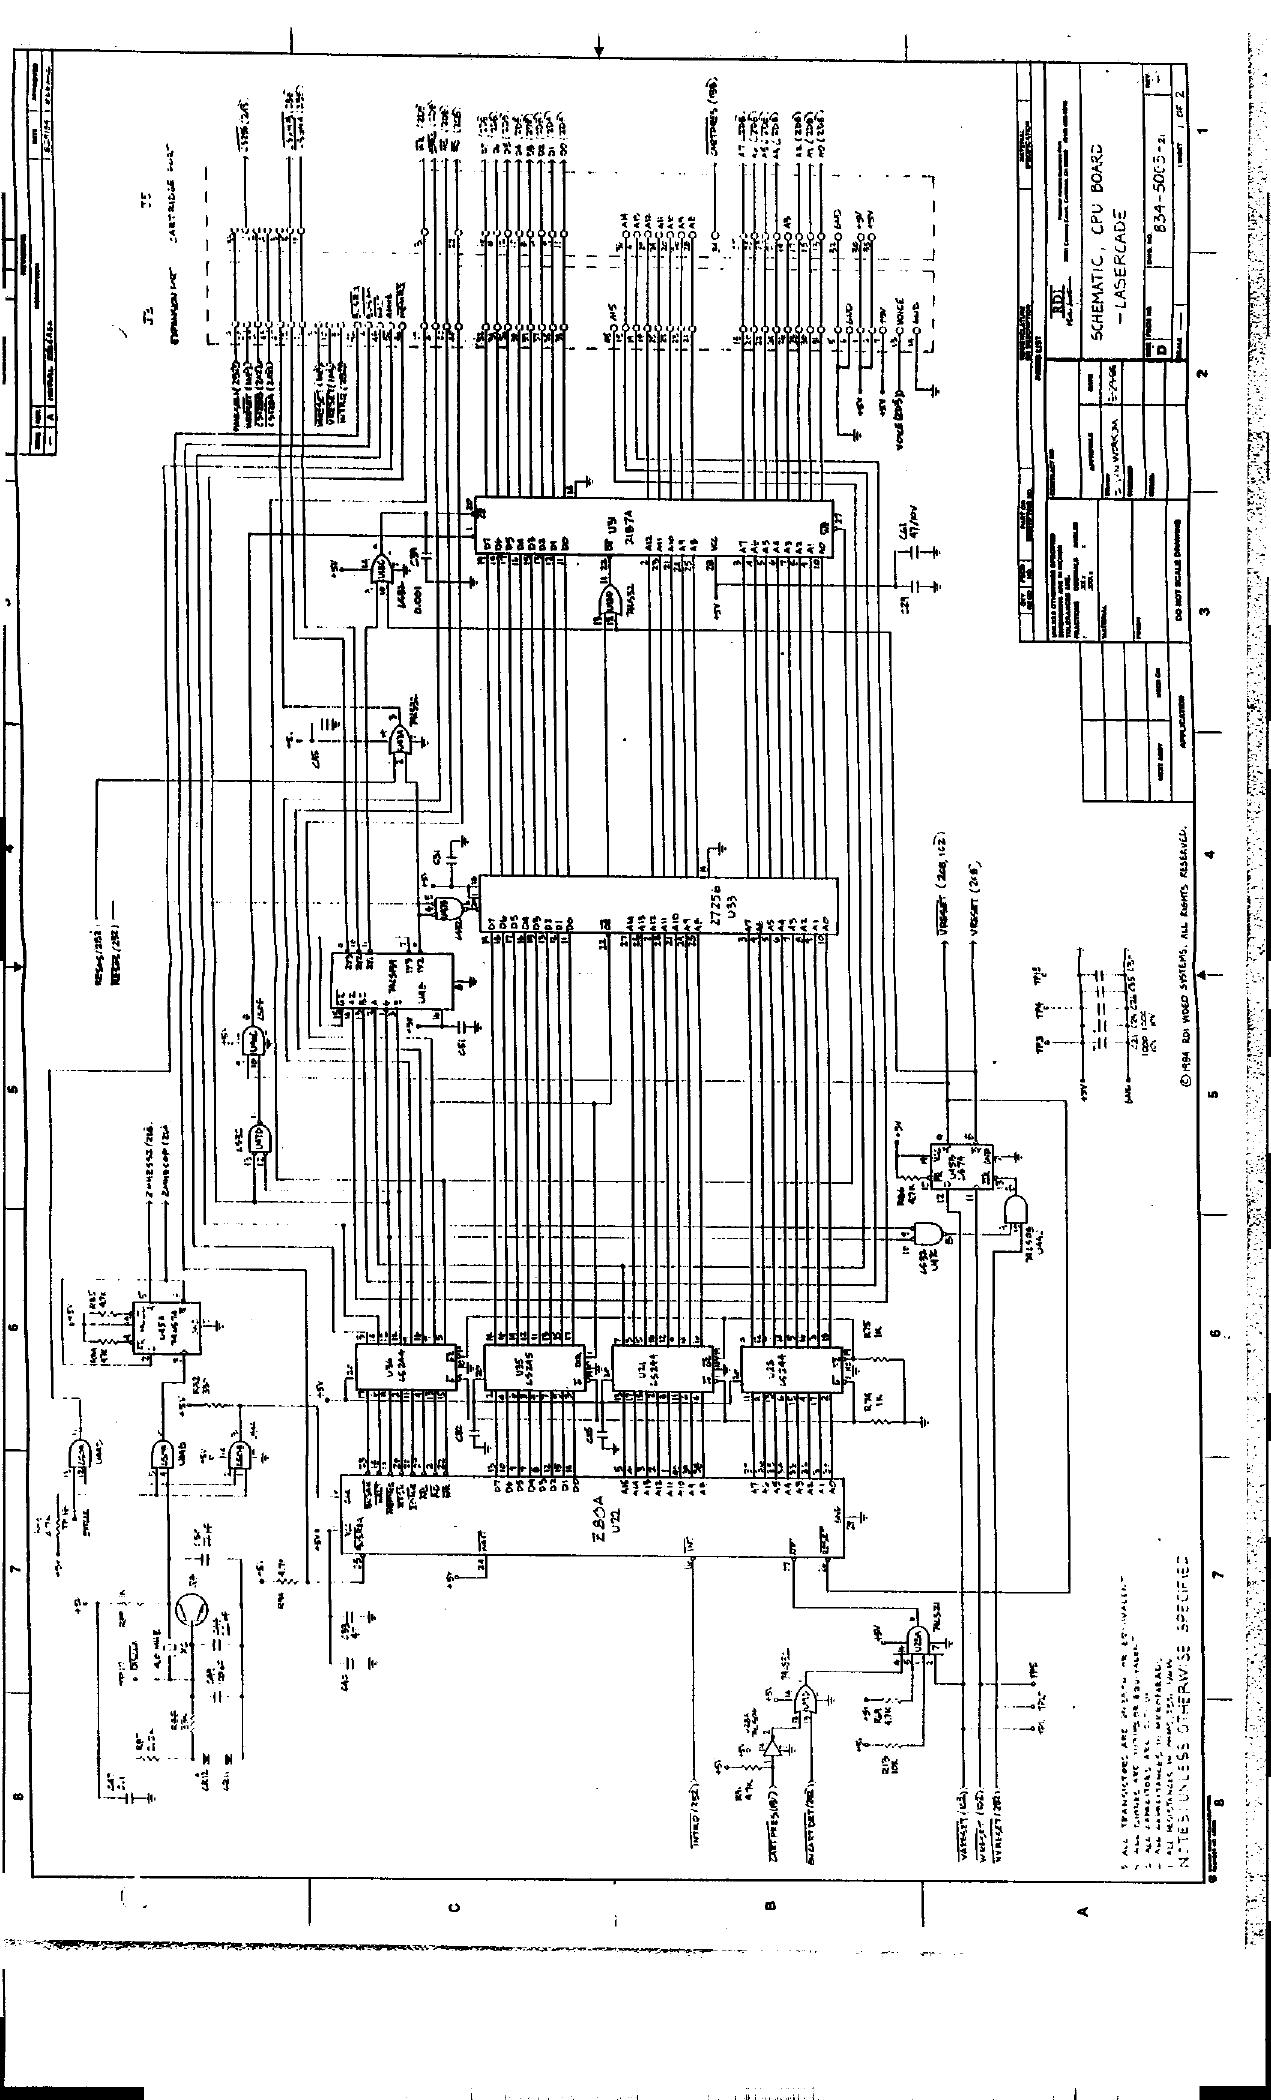 Donkey Kong TKG-4 11 CPU Schematics